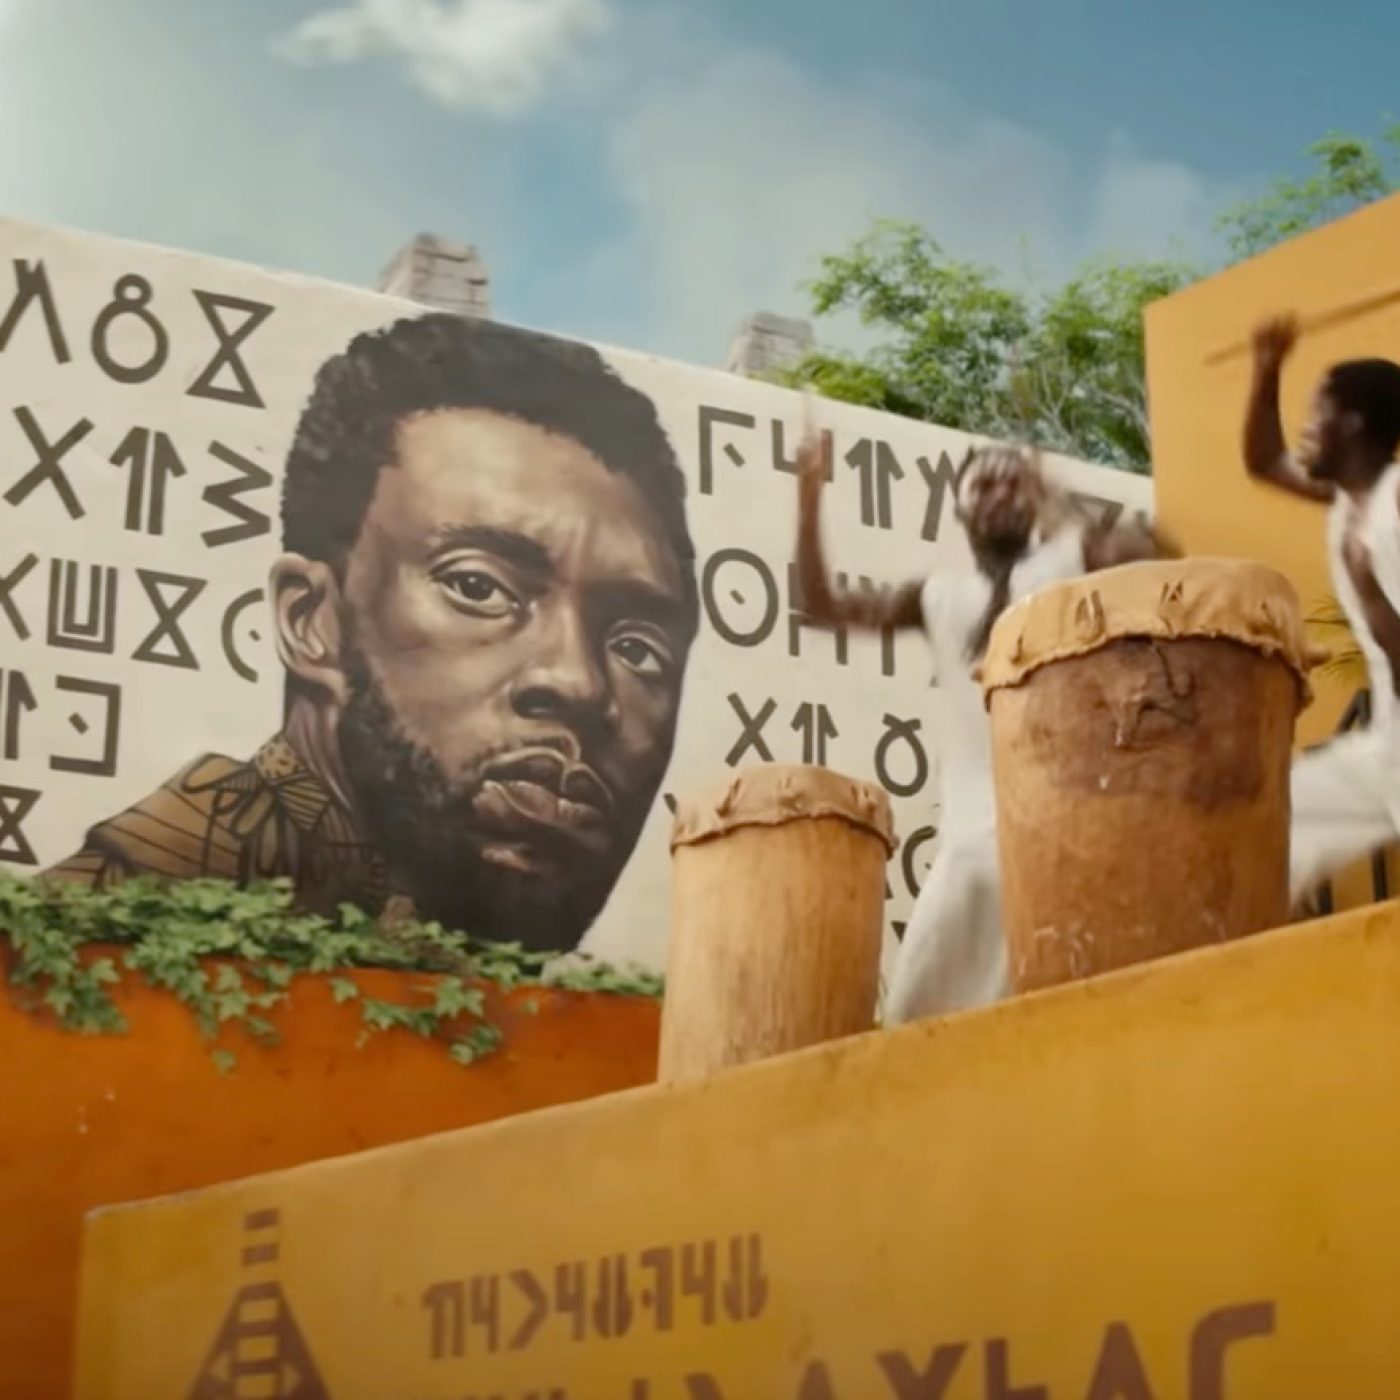 Ryan Coogler Explains Missing Black Panther Character in Wakanda Forever